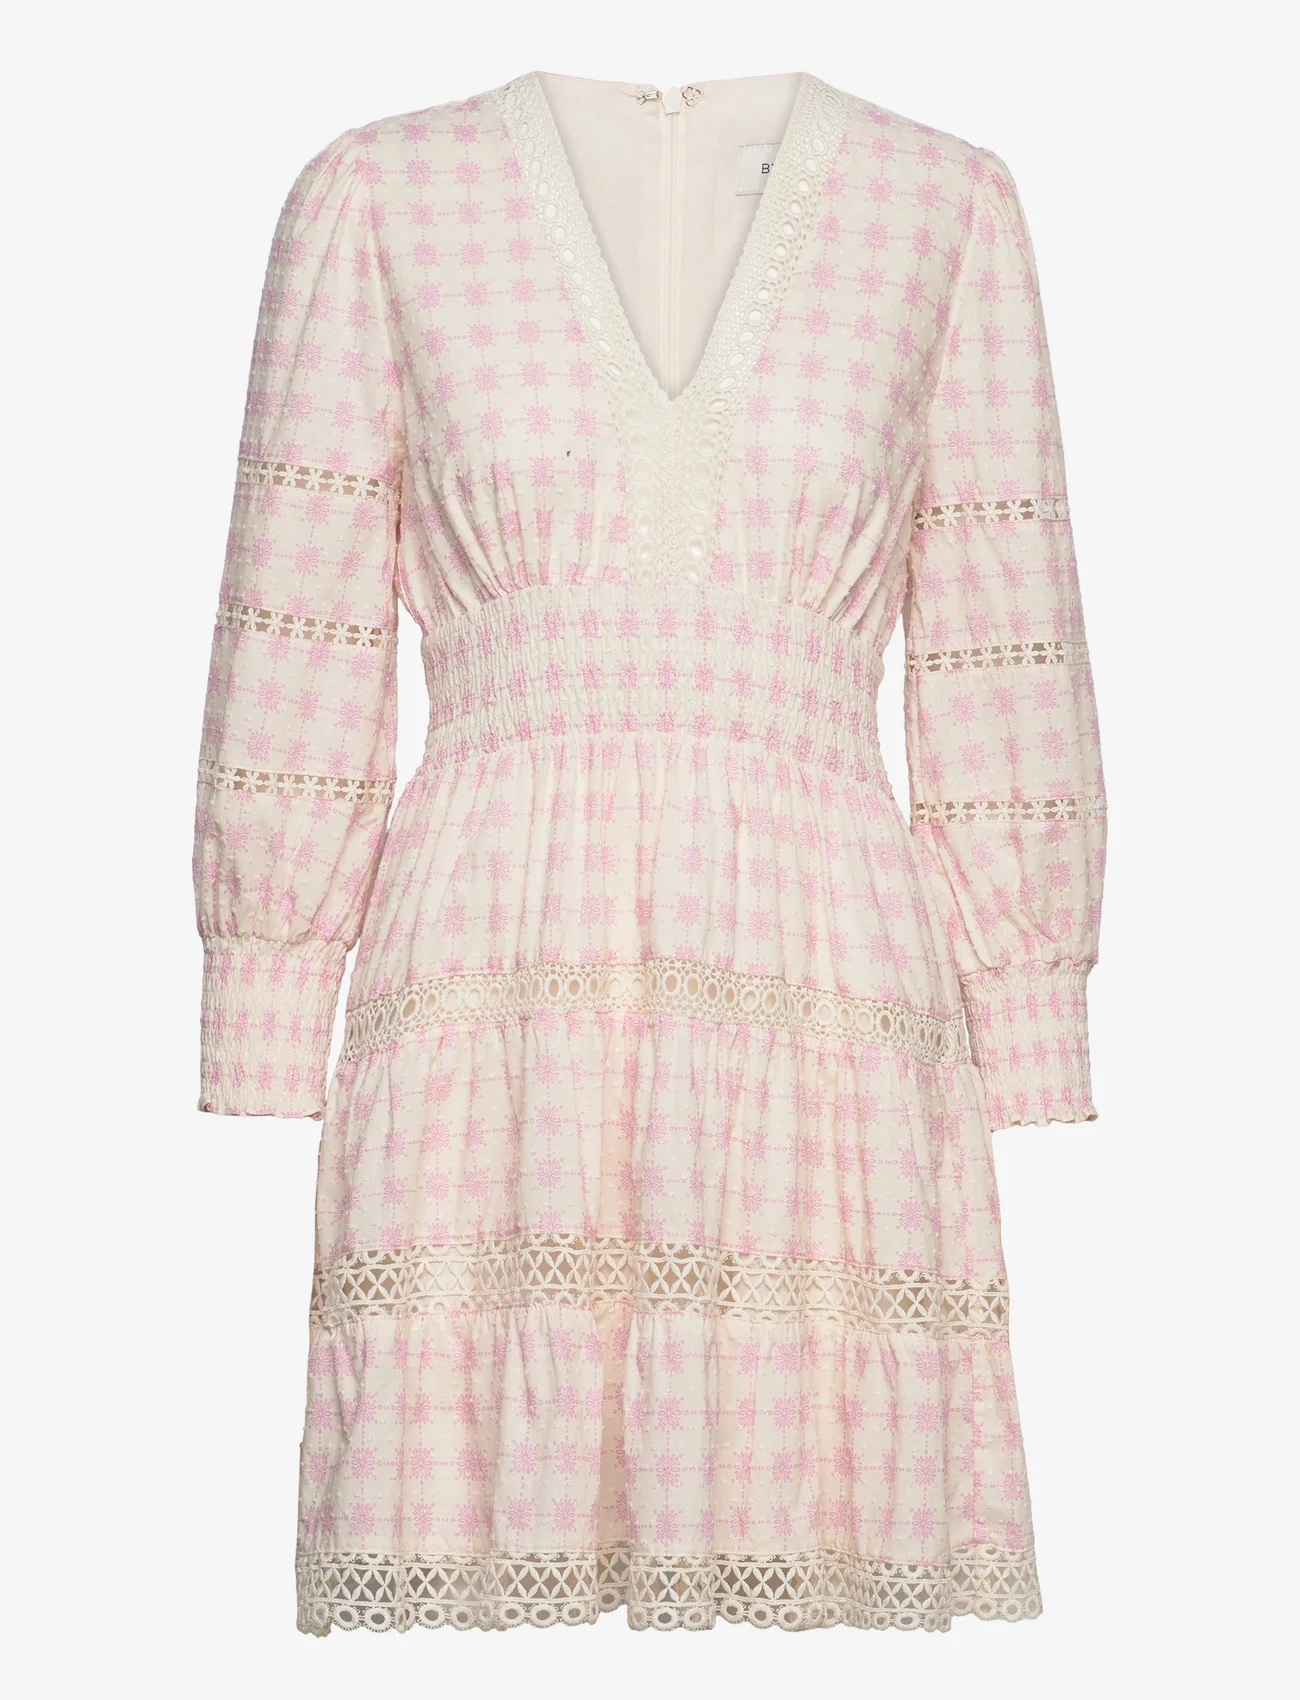 Malina - Inez dress - festklær til outlet-priser - french ditsy pink - 0